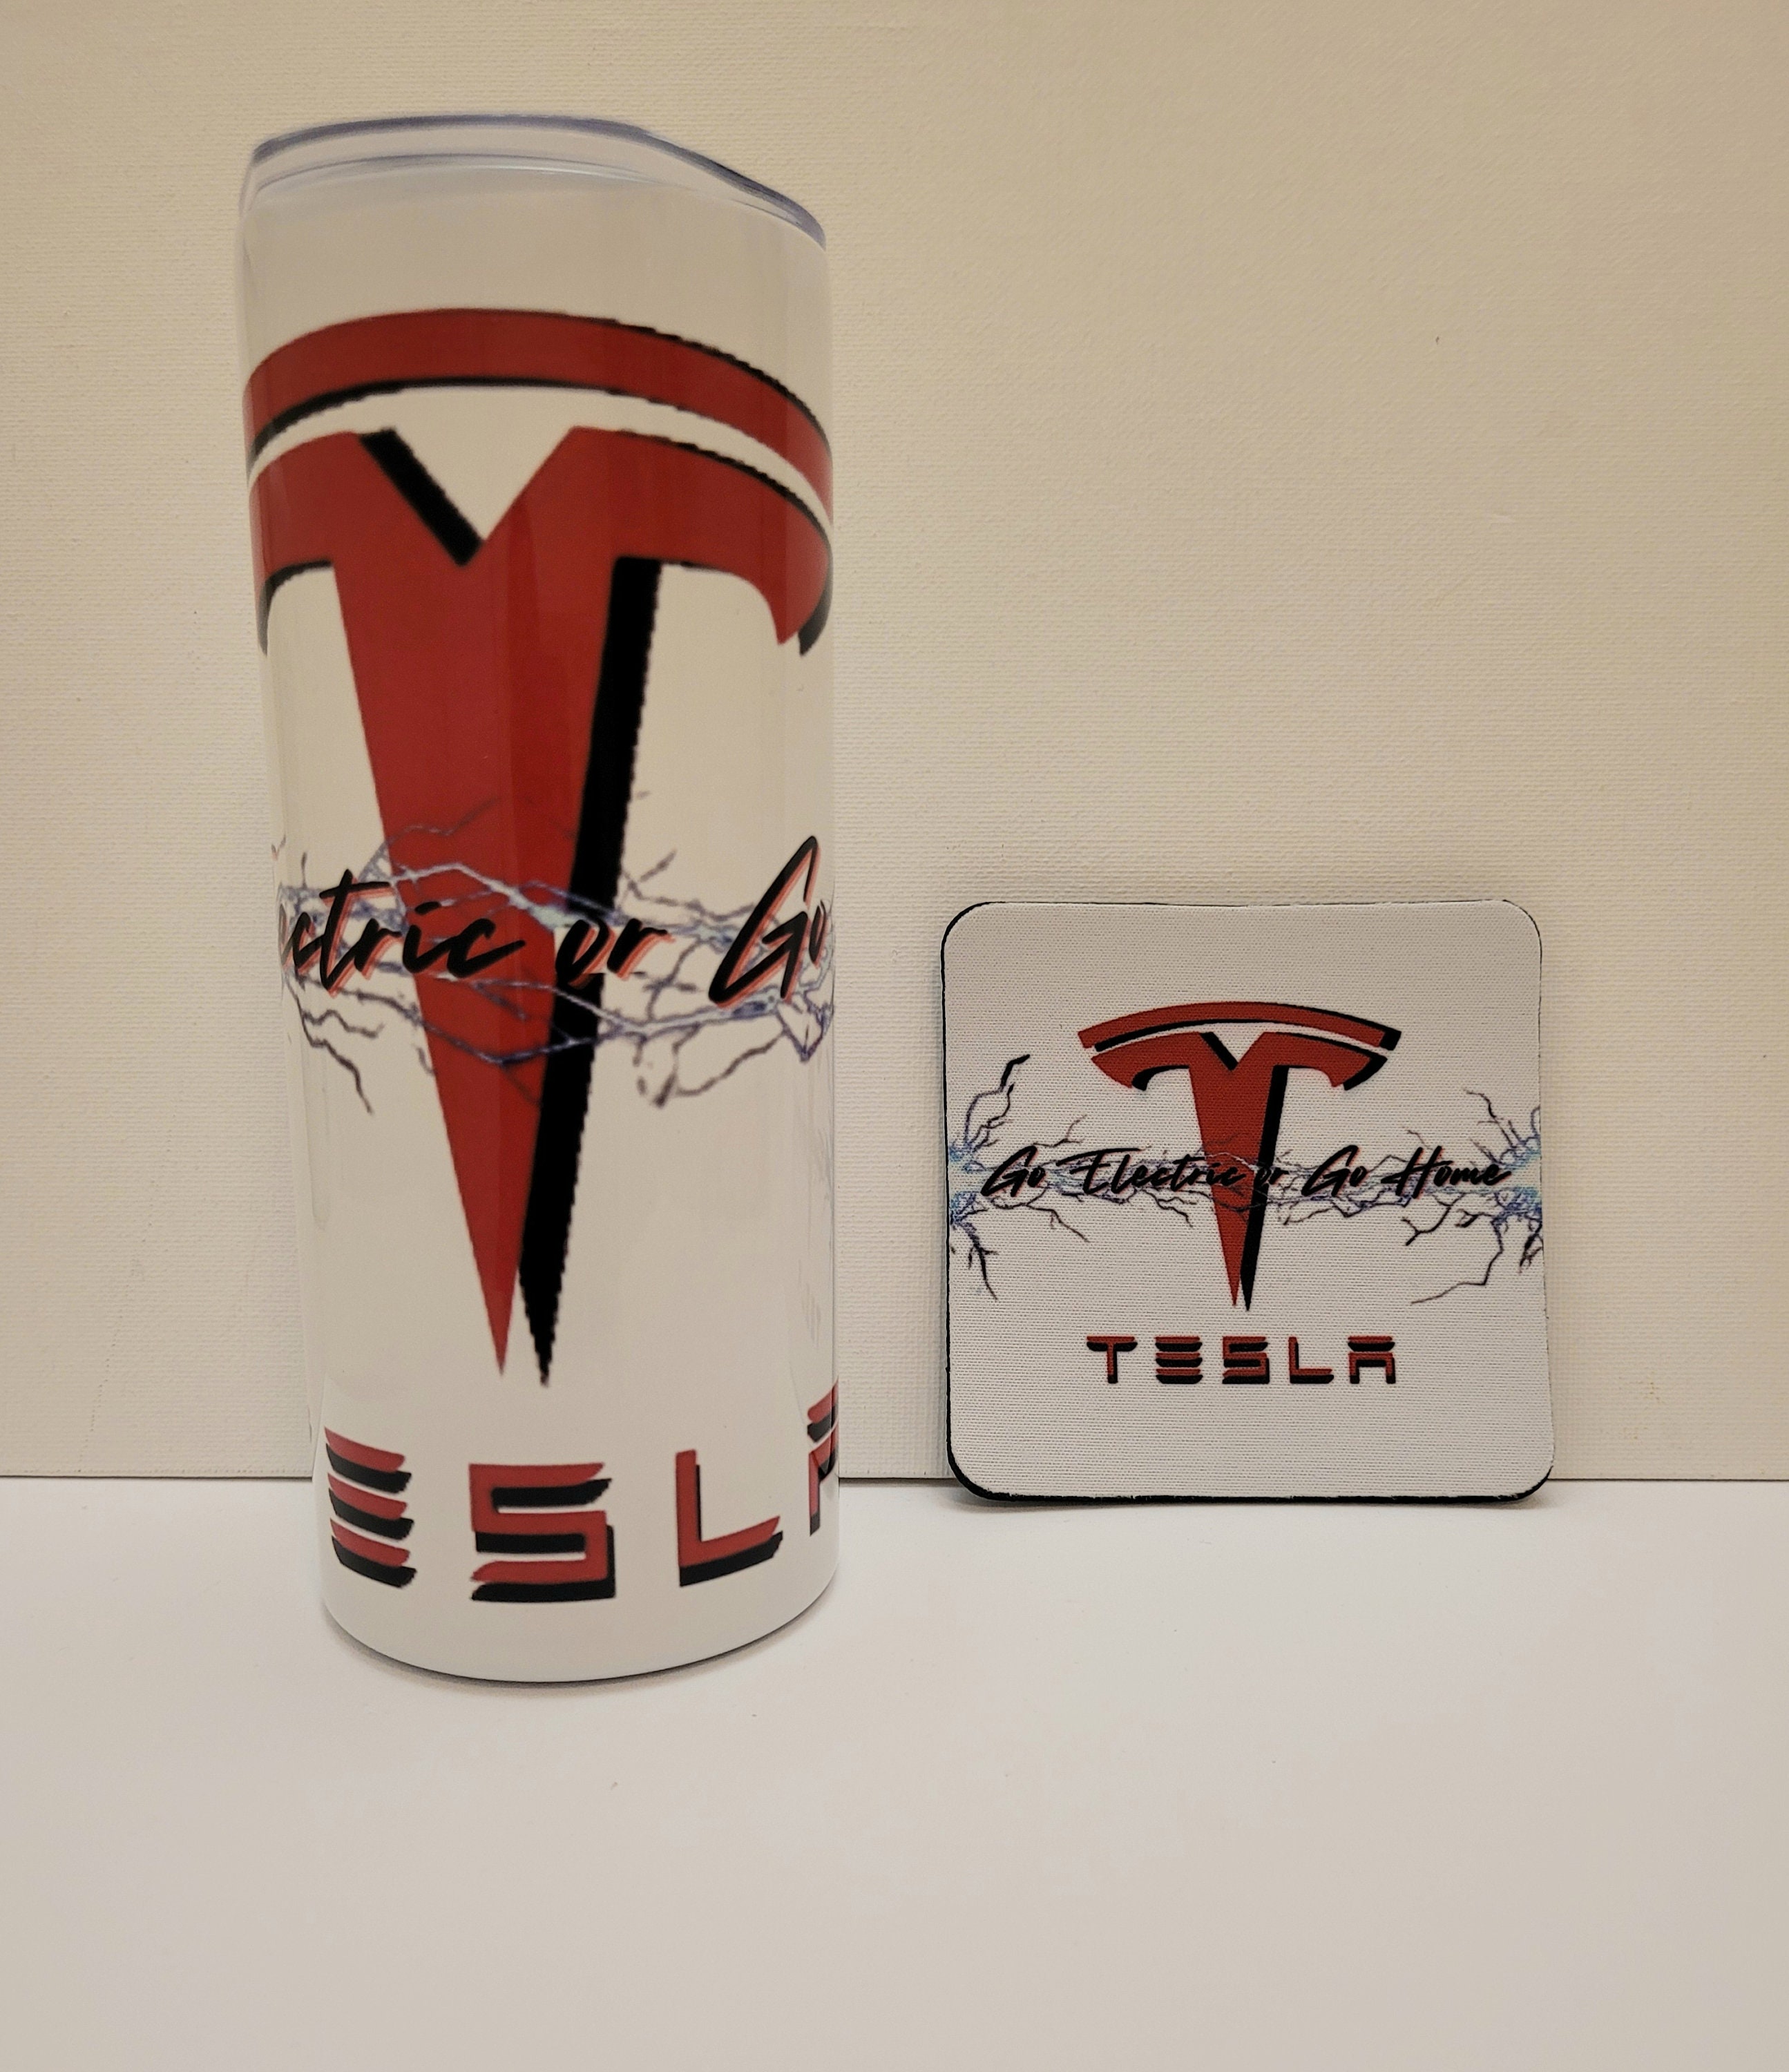 Tesla 20 oz Insulated Tumbler, Electric